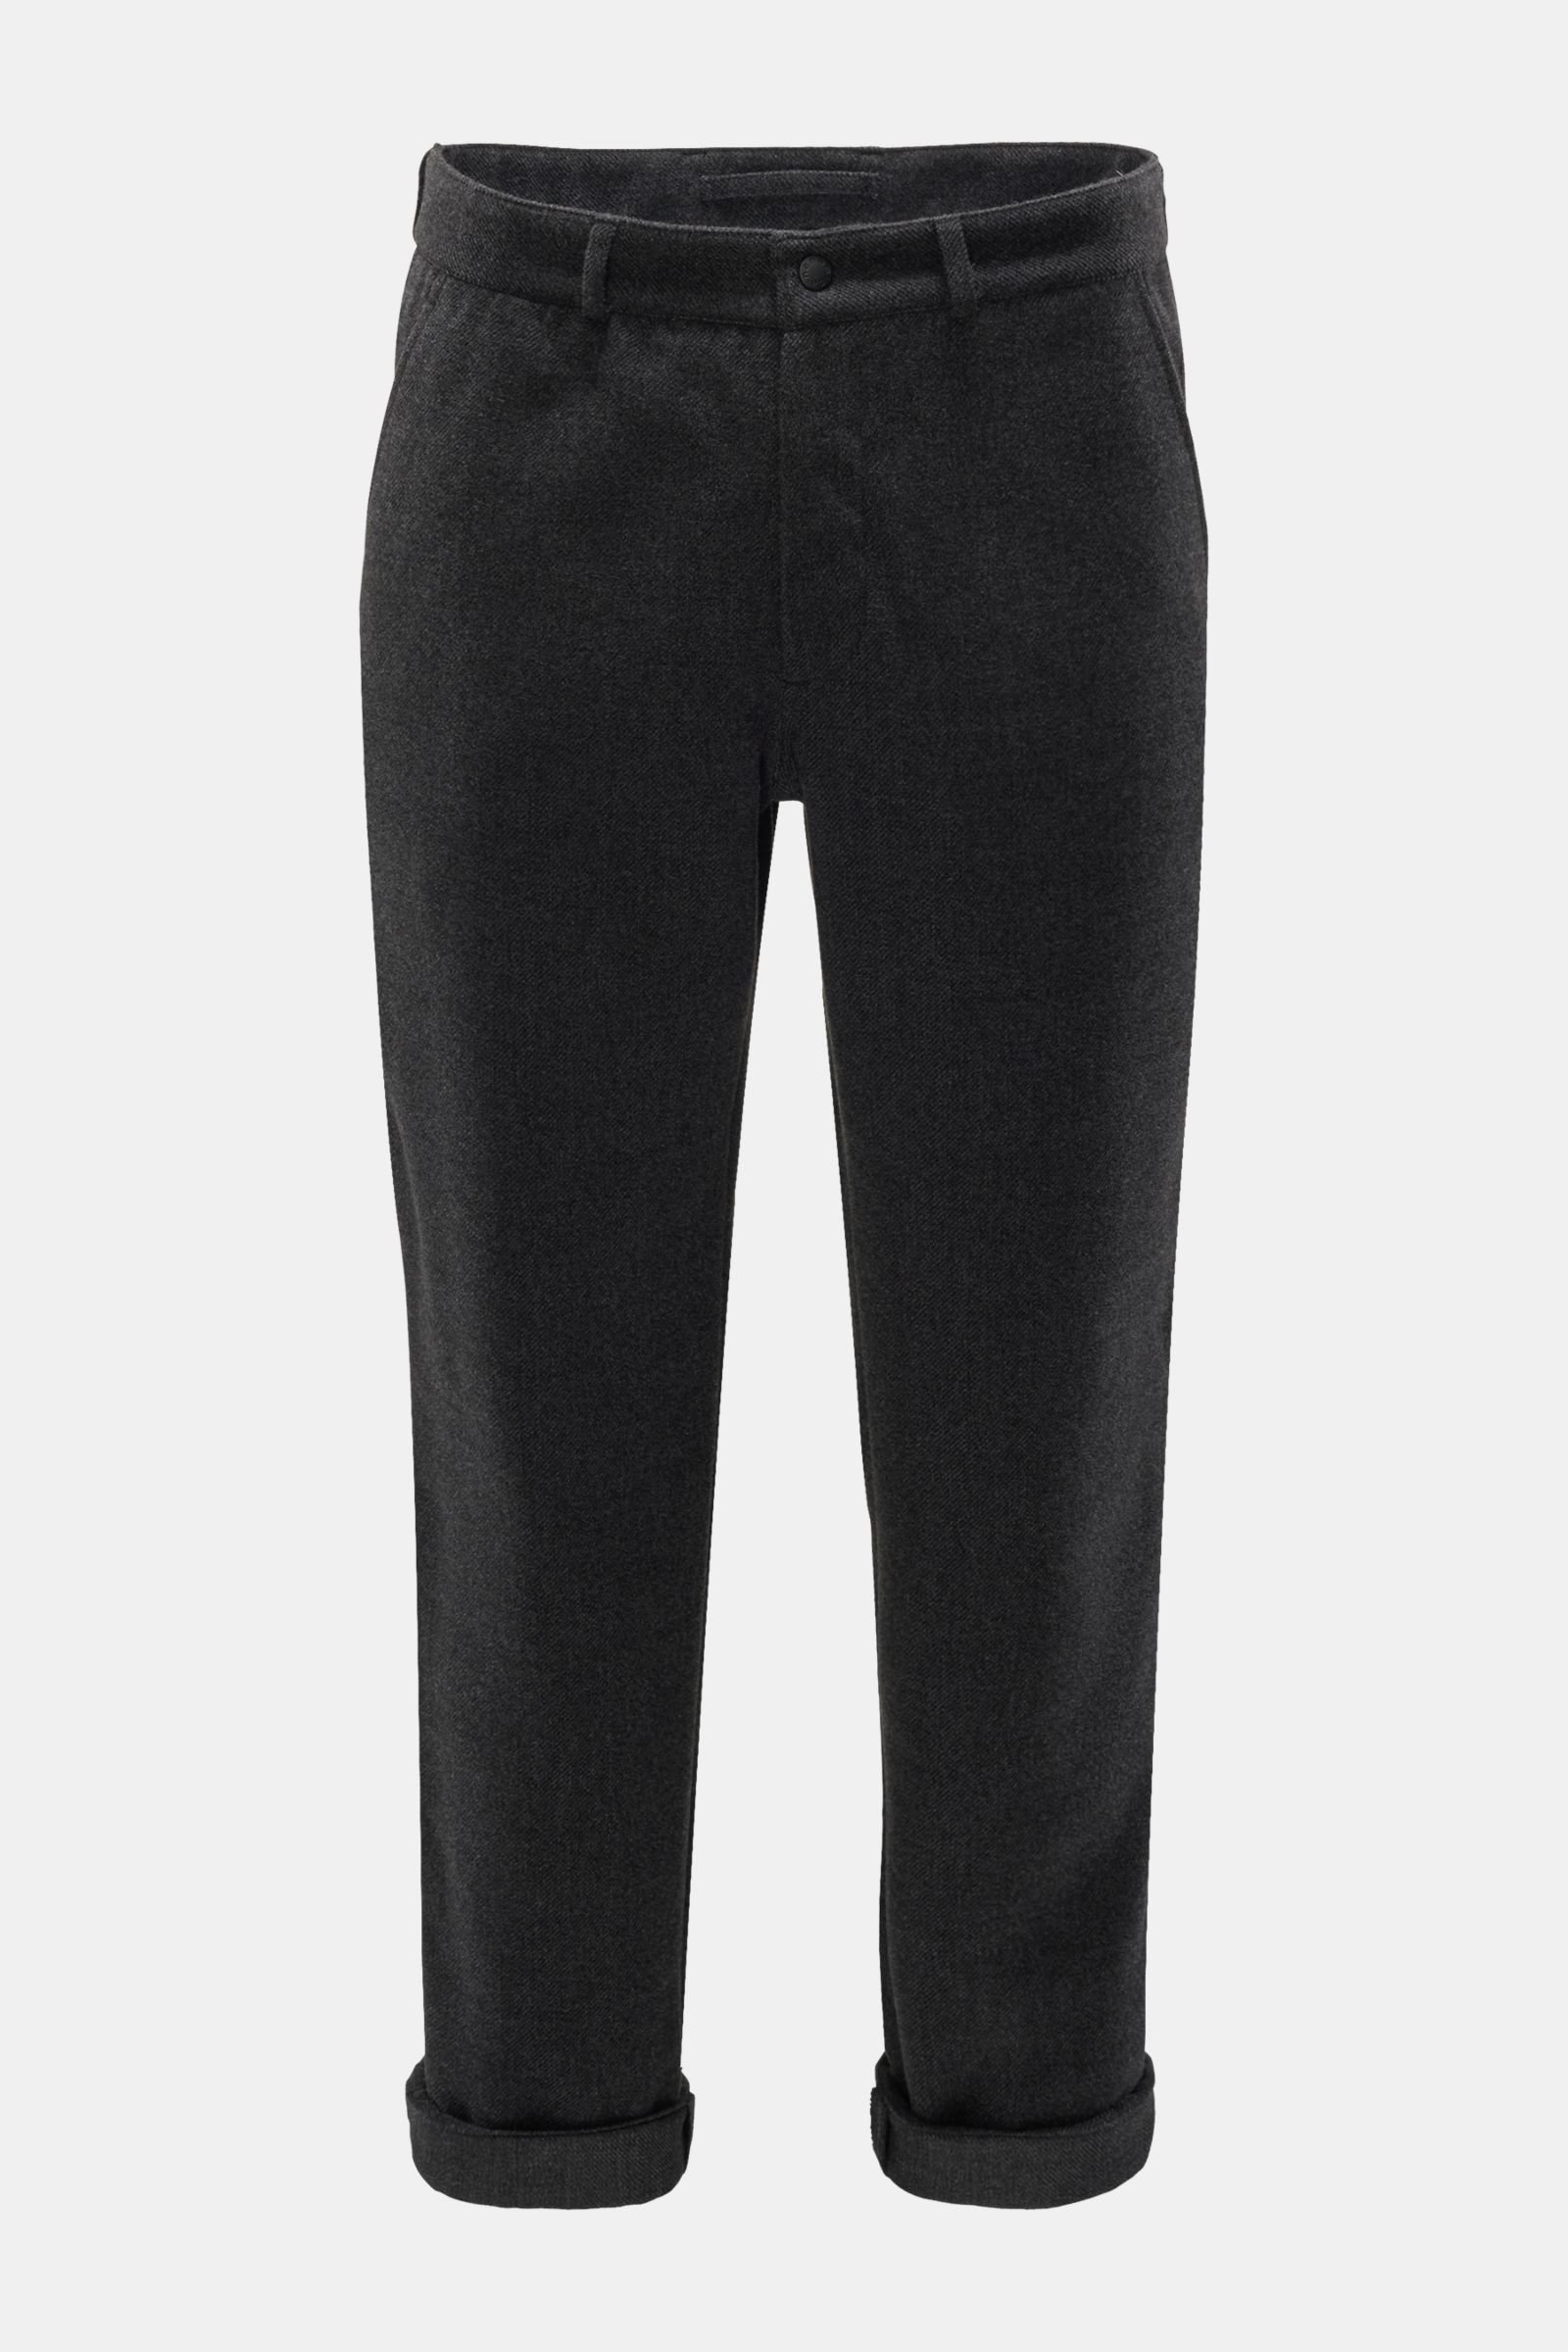 Trousers dark grey